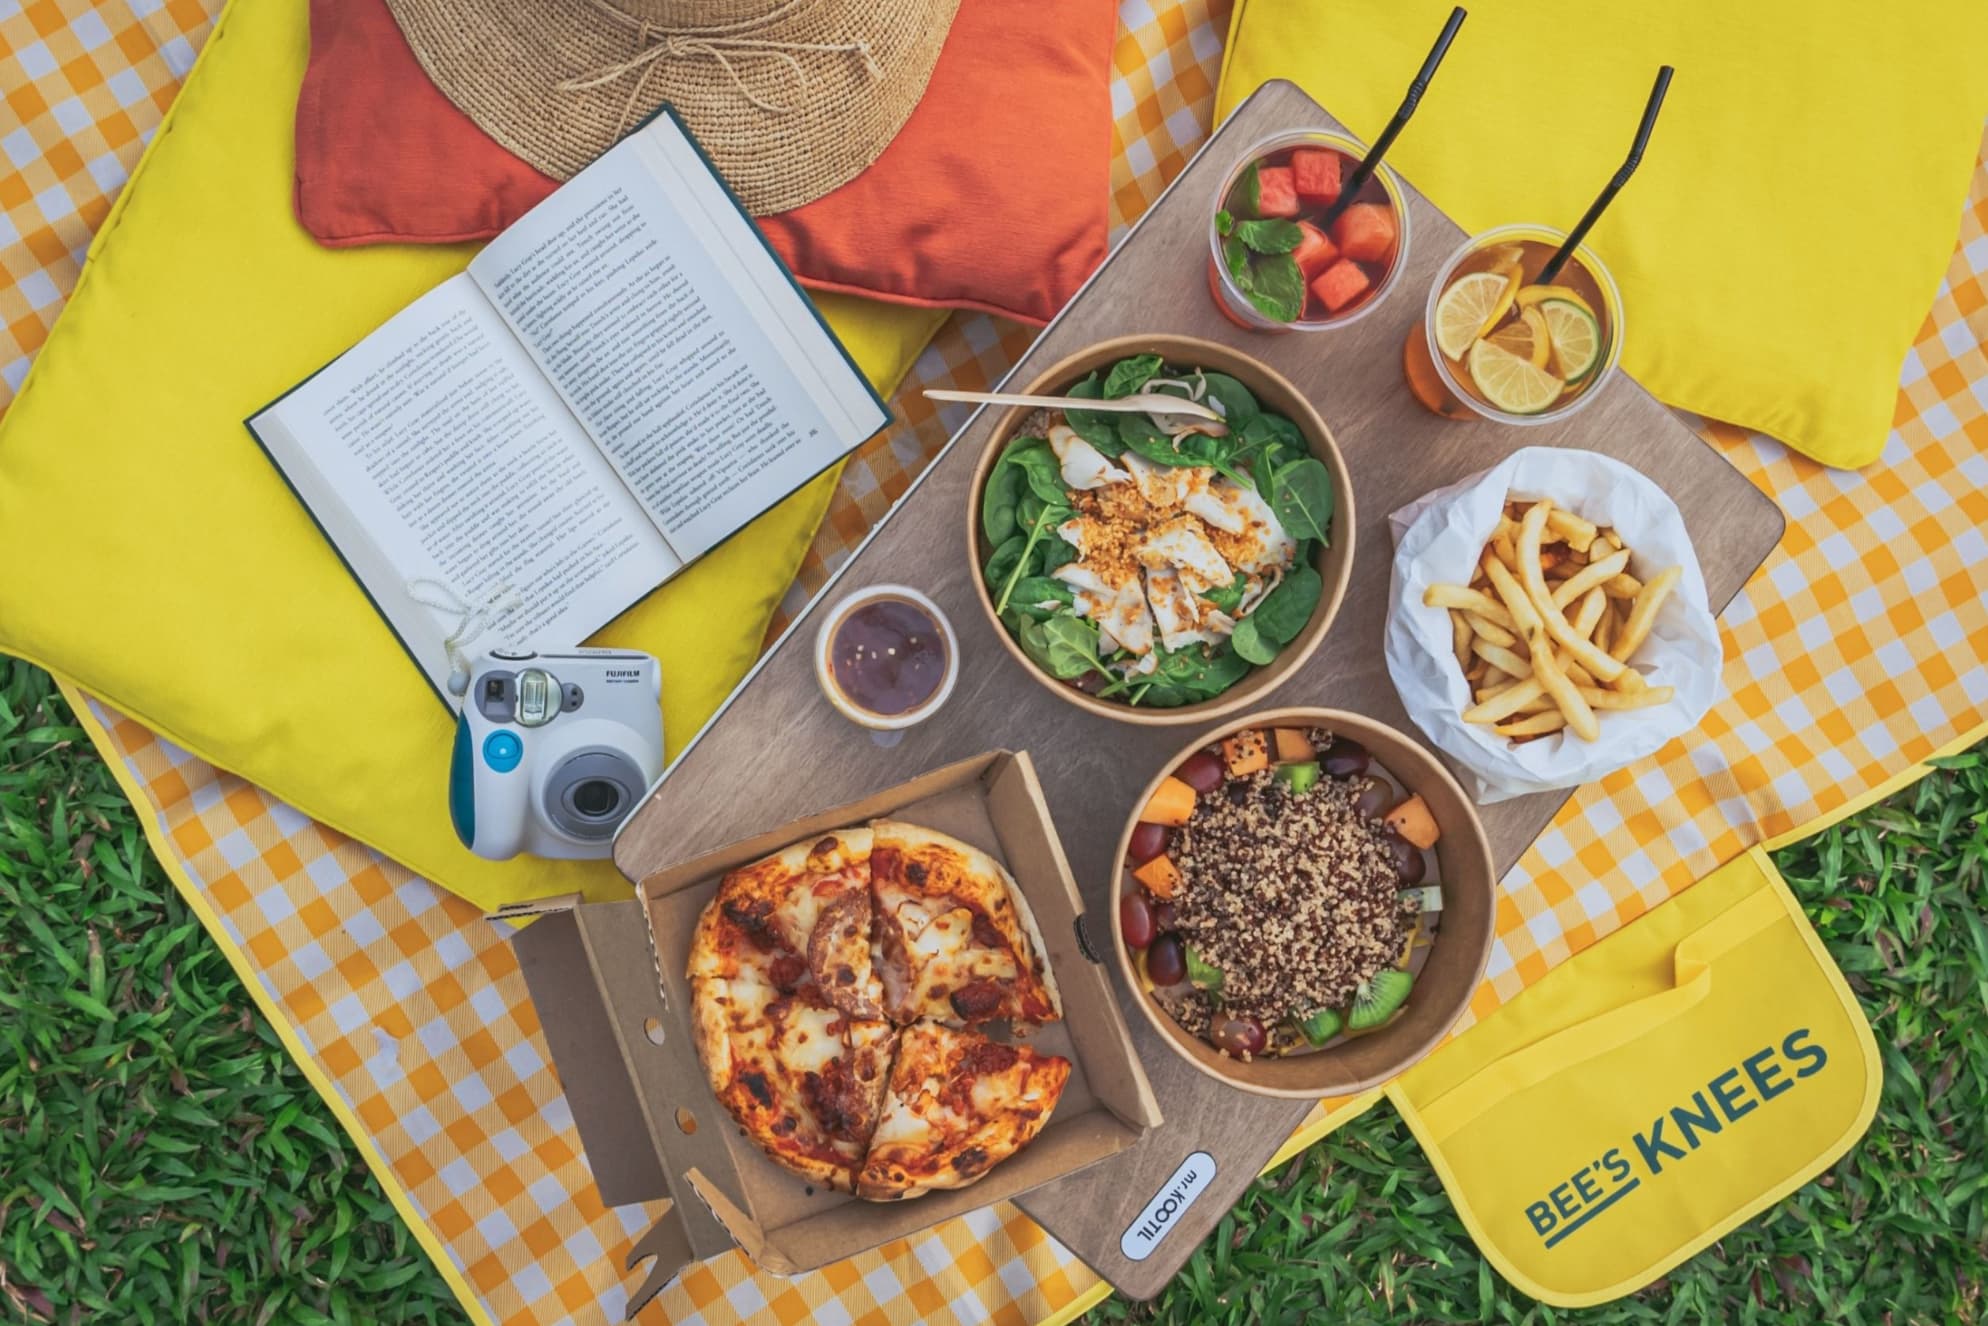 picnic-food-bundles-singapore-bees-knees